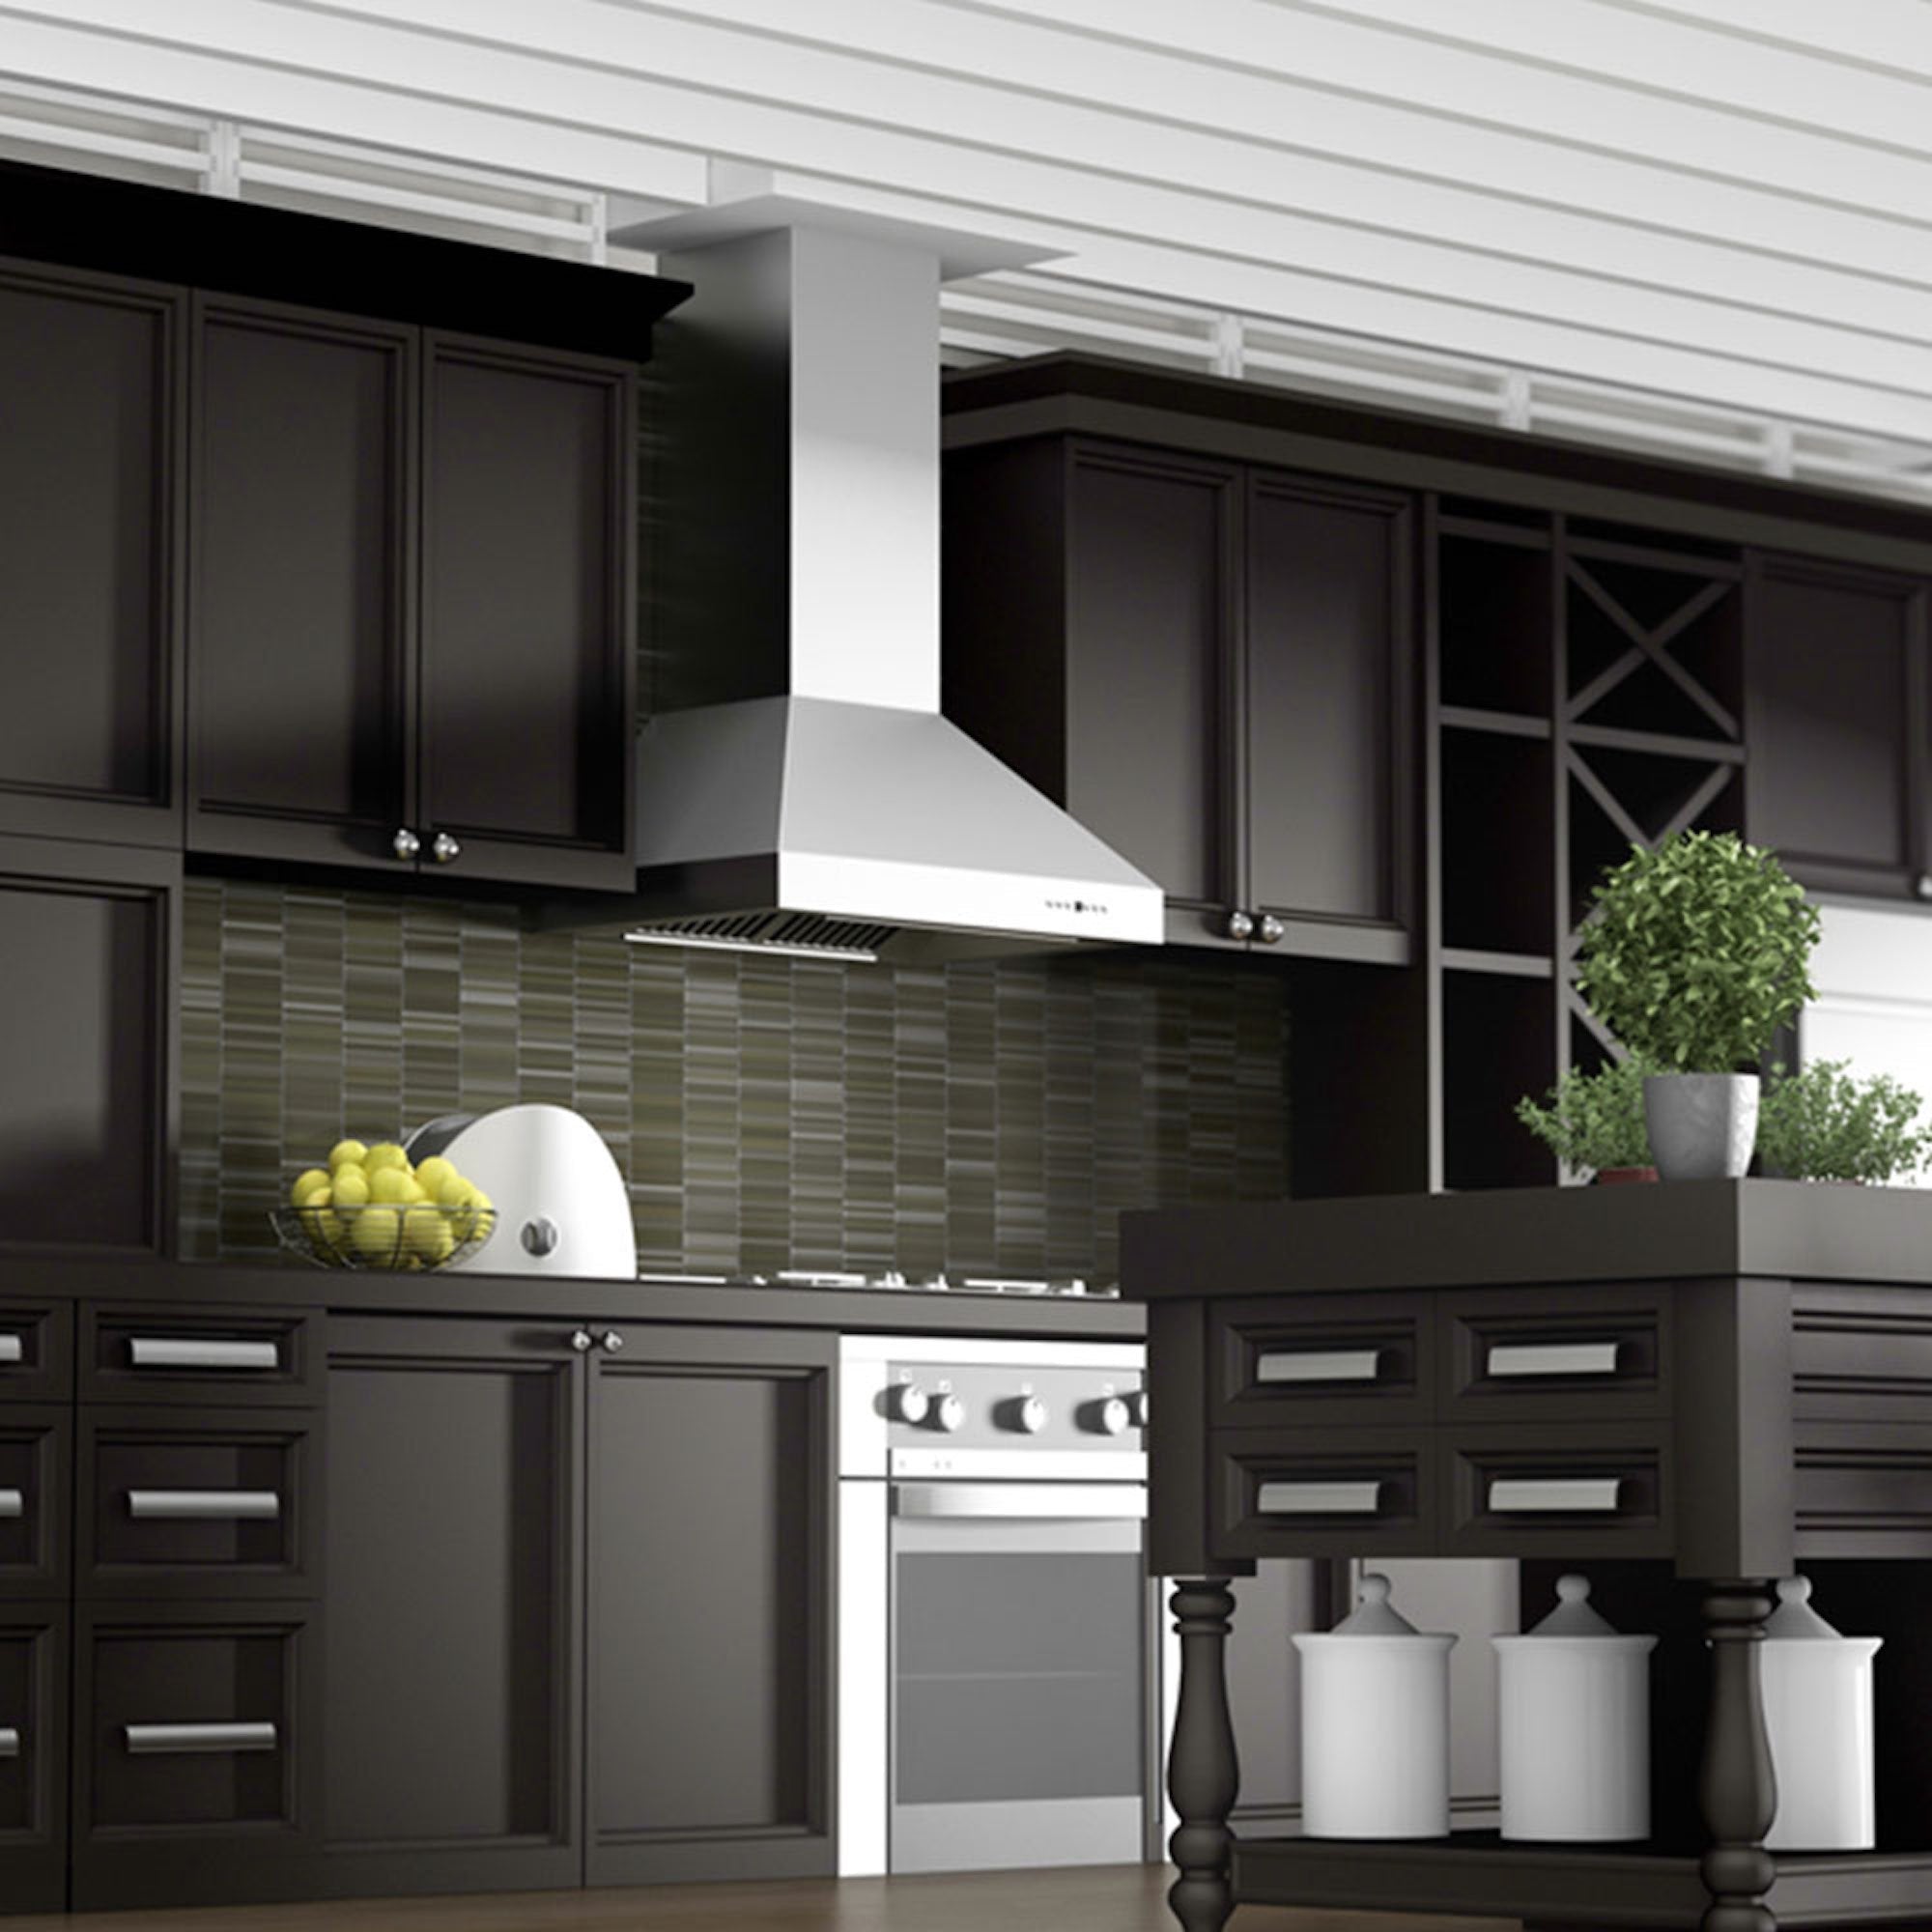 ZLINE Outdoor Wall Mount Range Hood in Outdoor Approved Stainless Steel (667-304) rendering in a luxury kitchen wide.